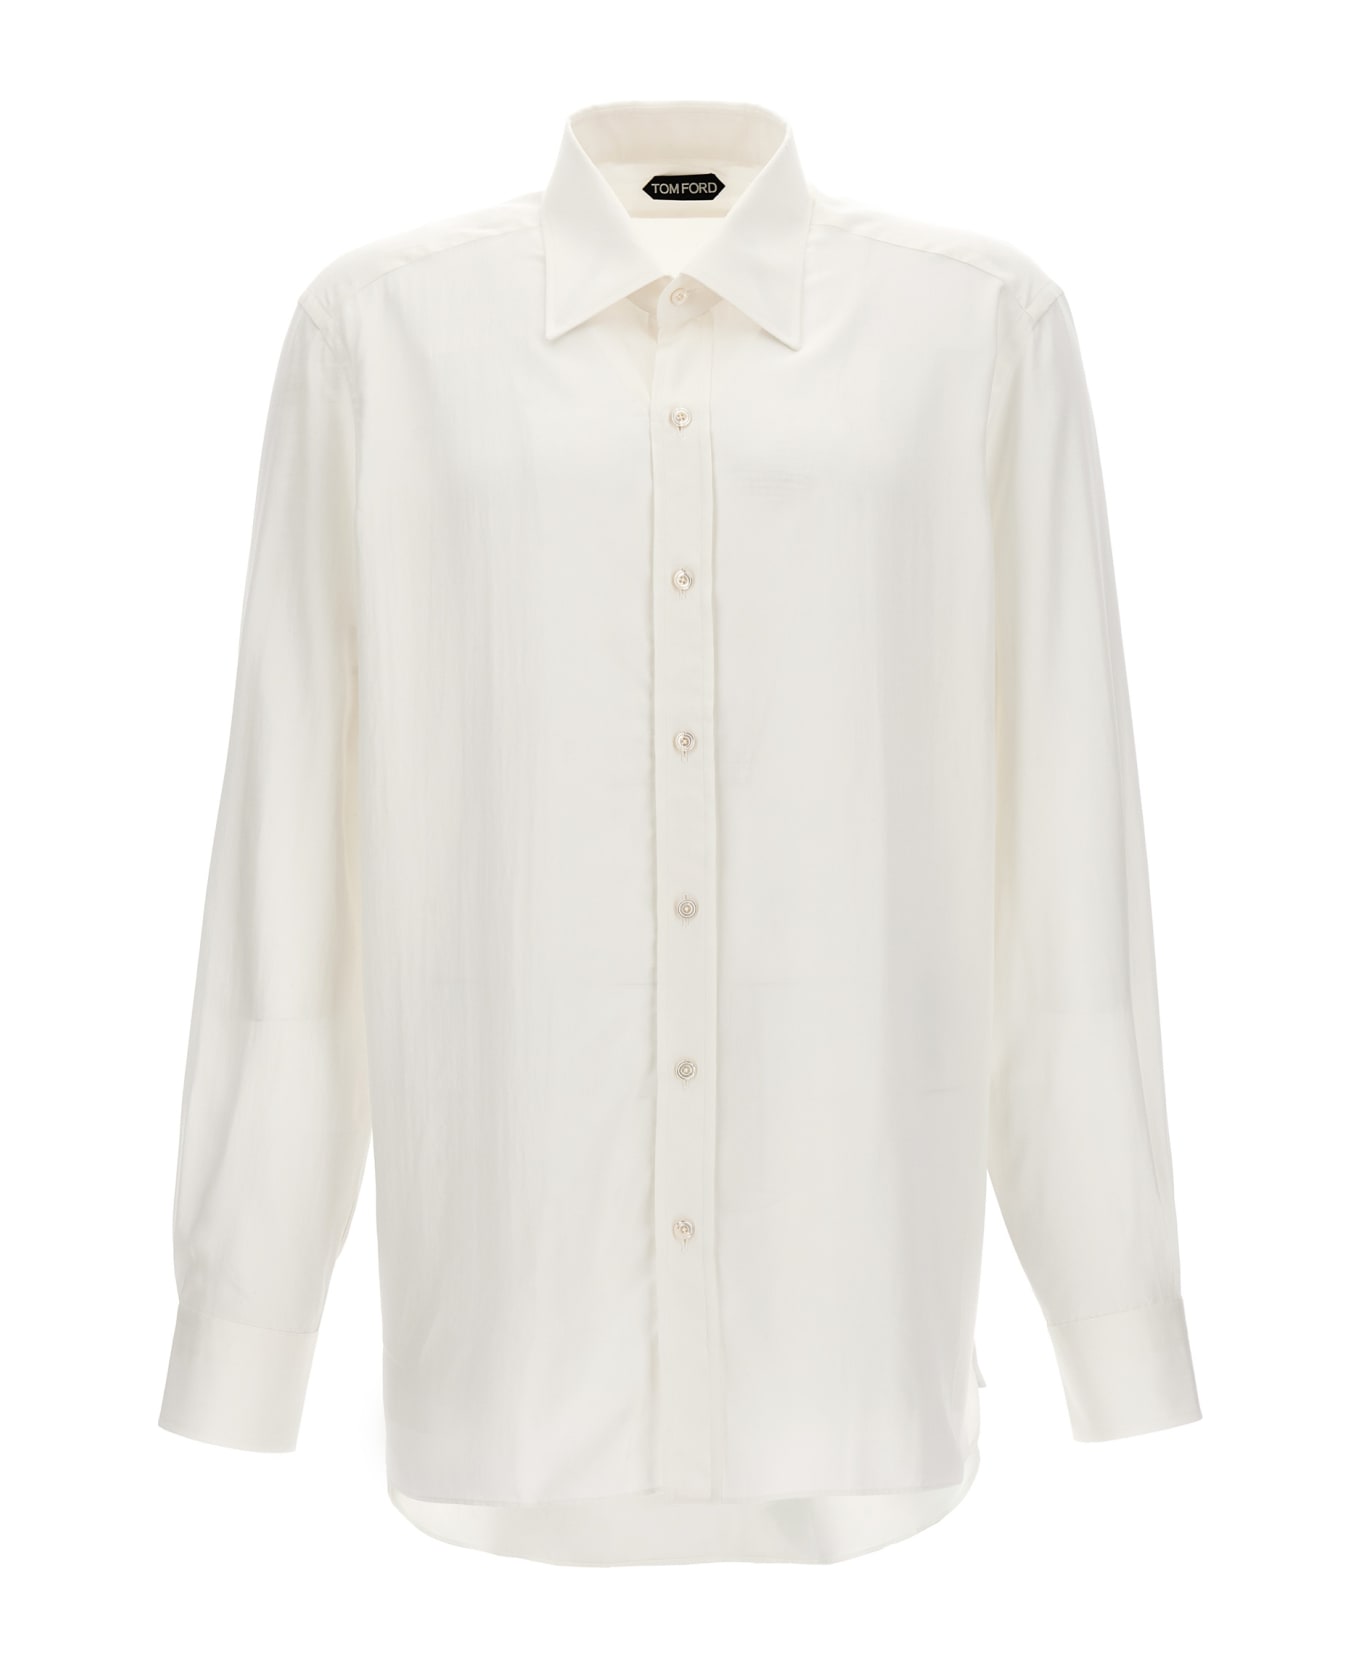 Tom Ford 'parachute' Shirt - White シャツ